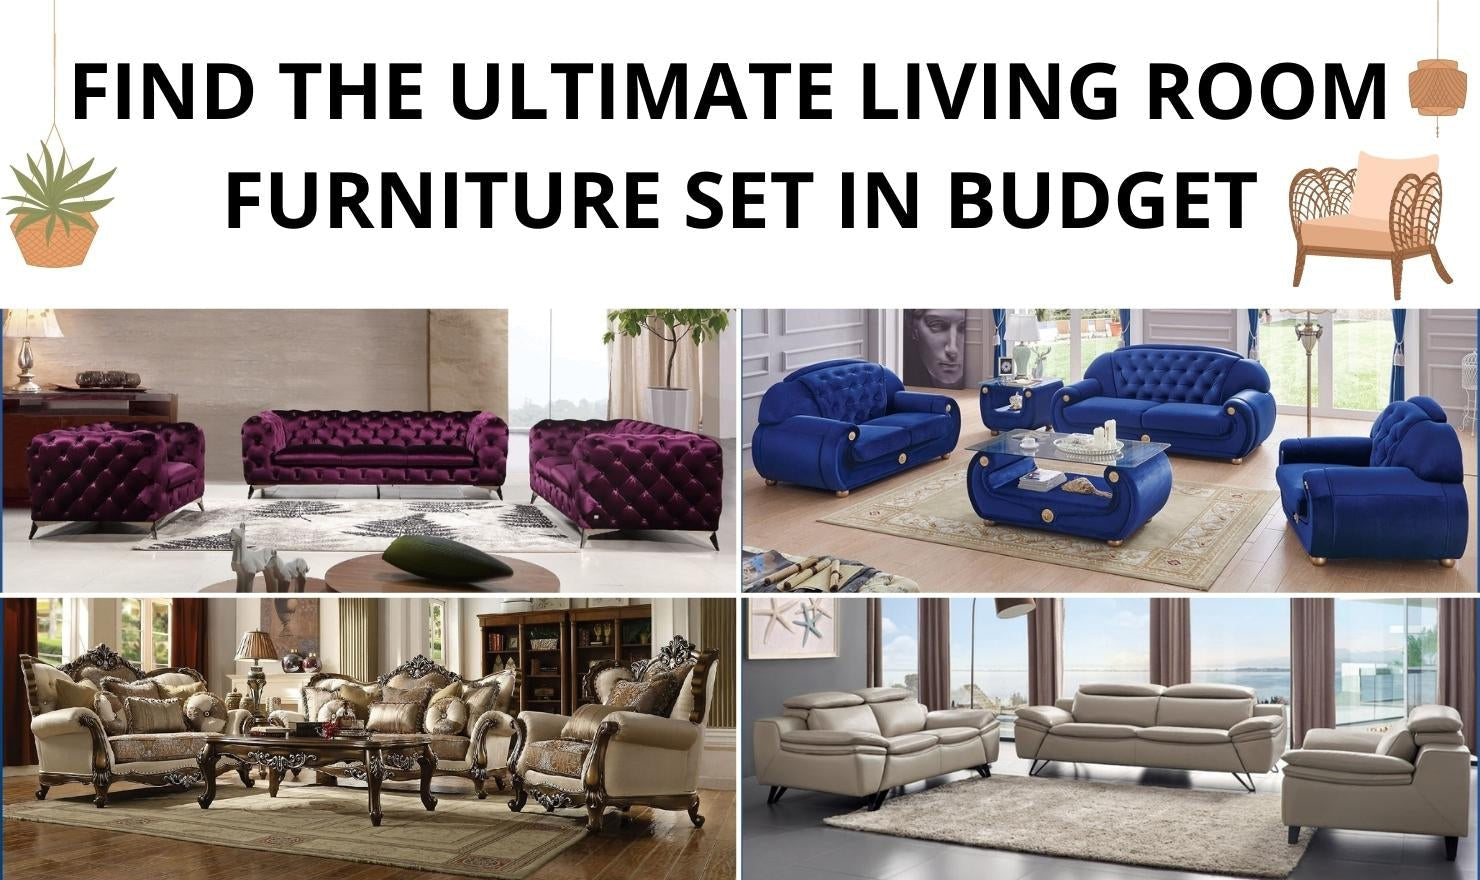 Find the ultimate living room furniture set in budget